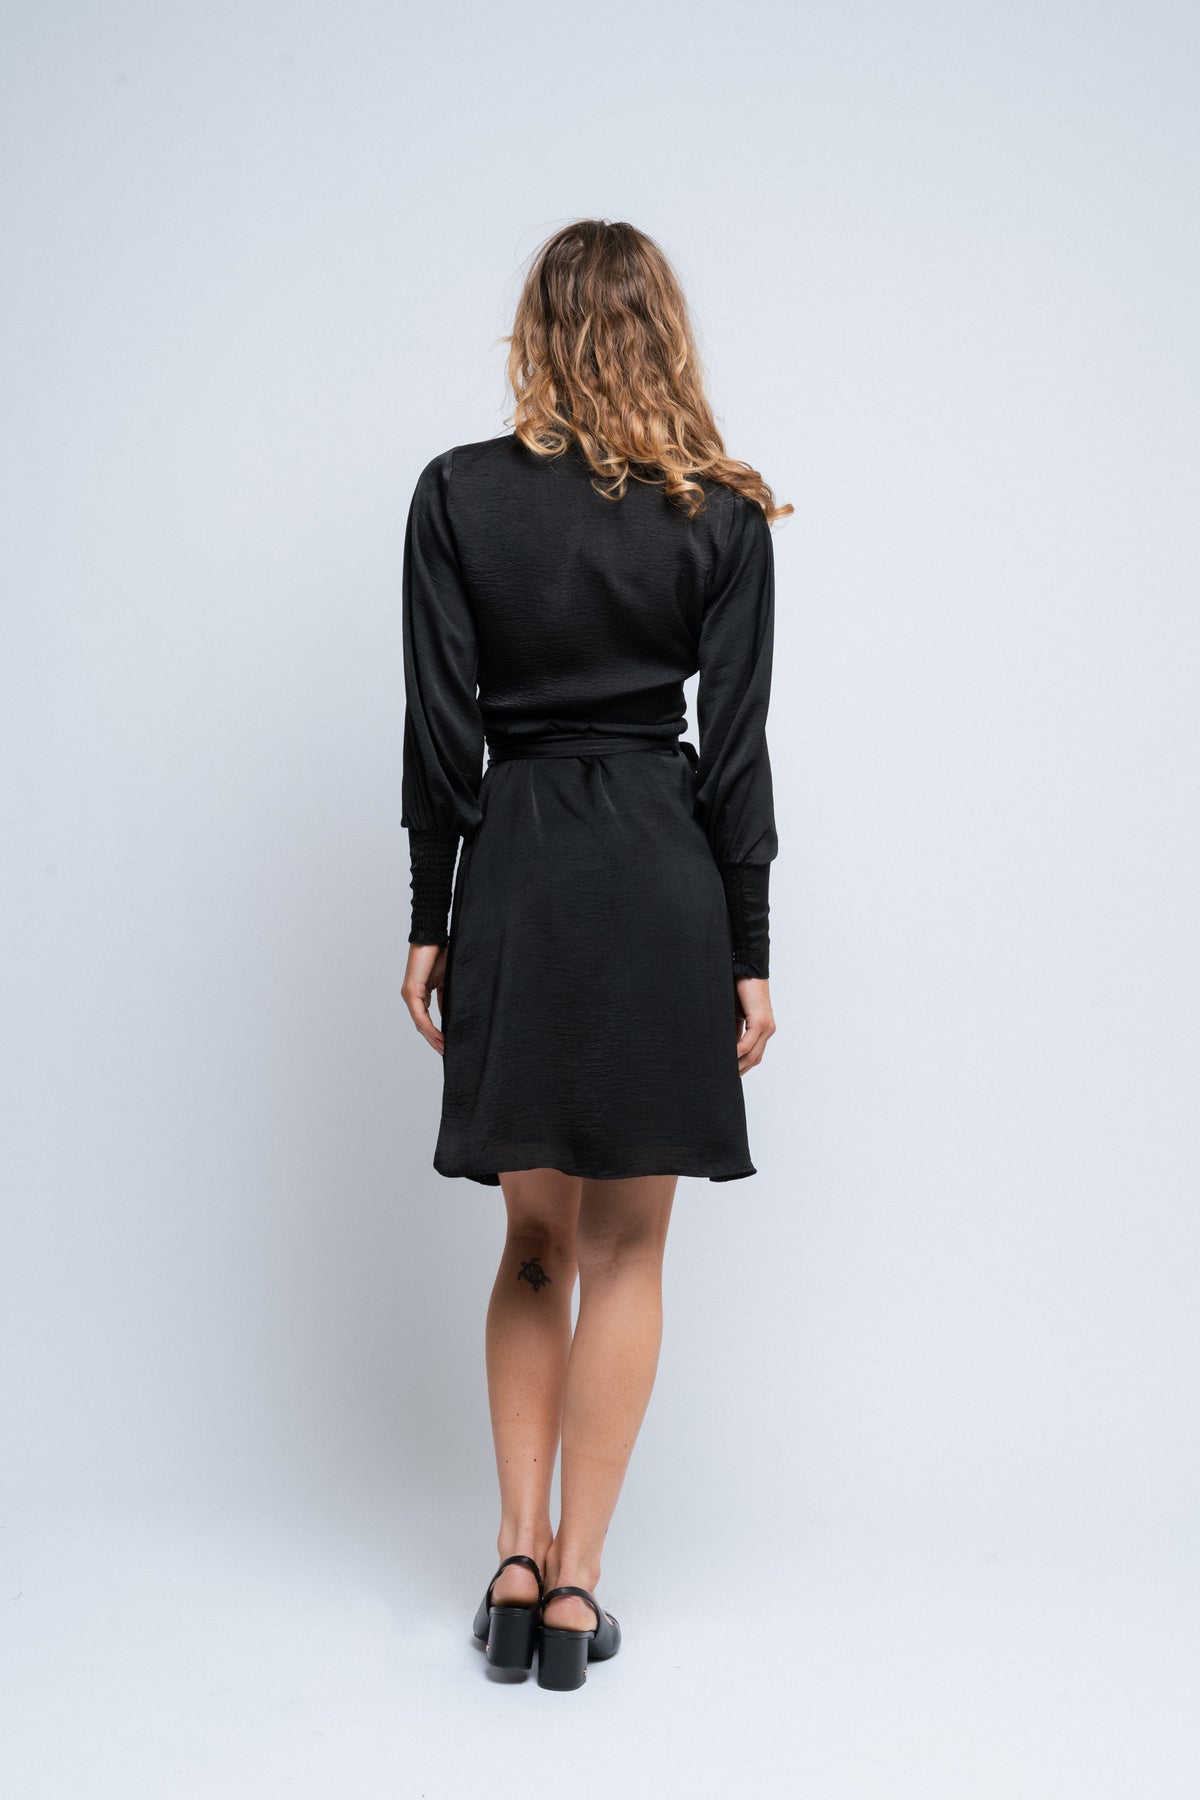 Chanelle Dress - Black